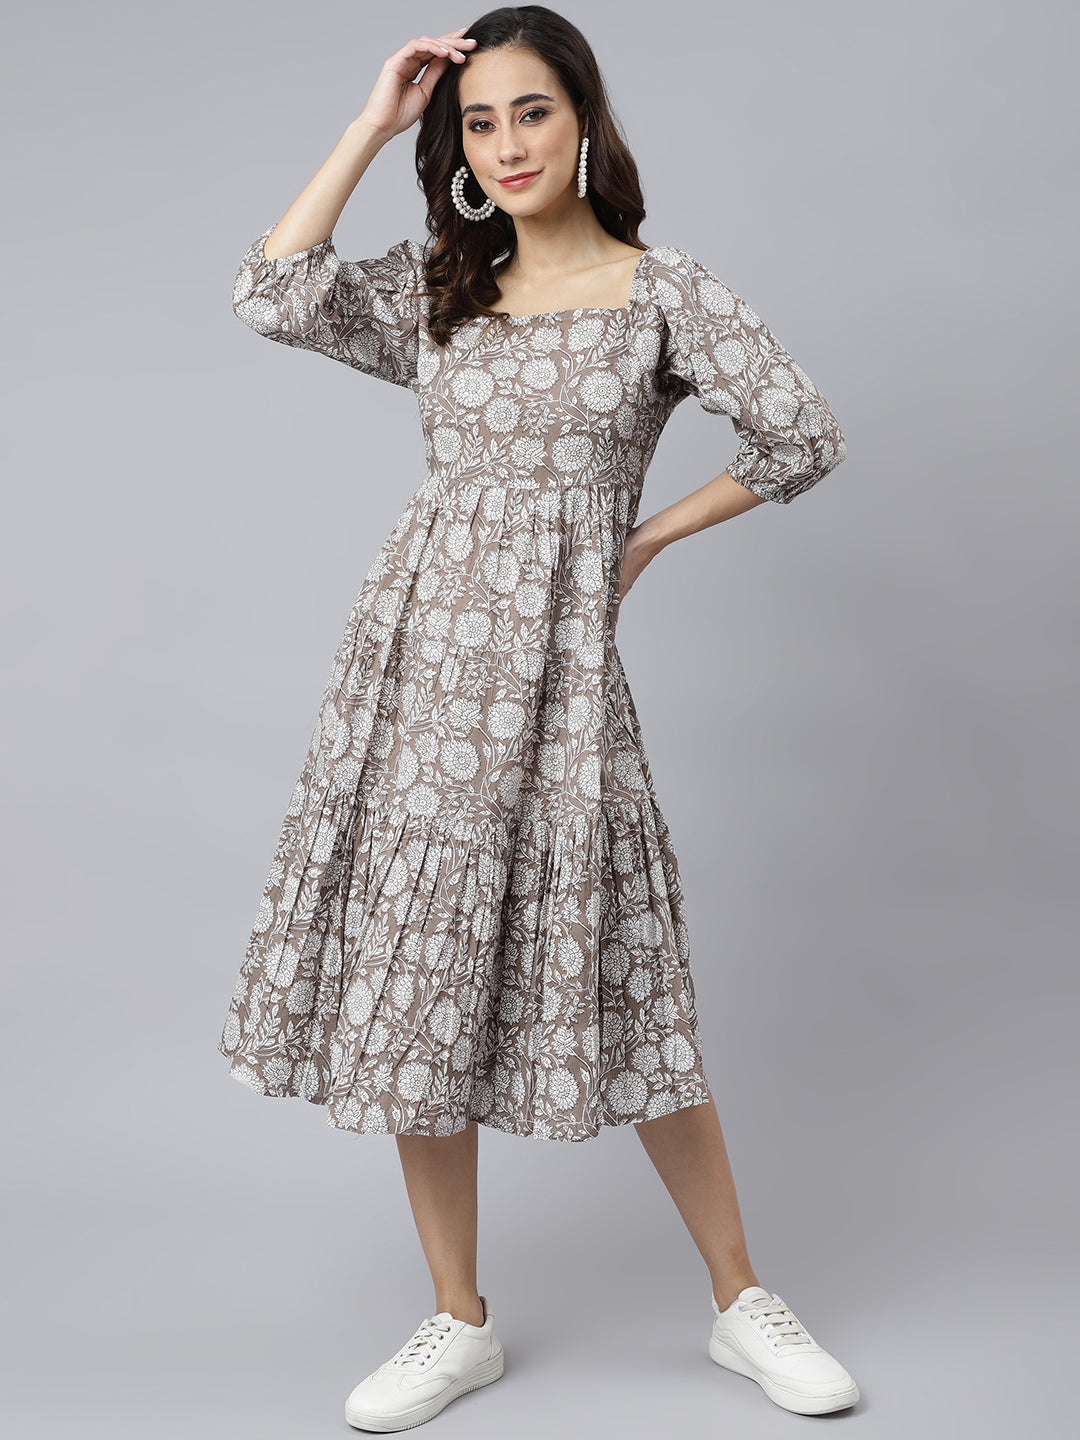 Women's Floral Printed Grey Cotton Dress - Janasya USA